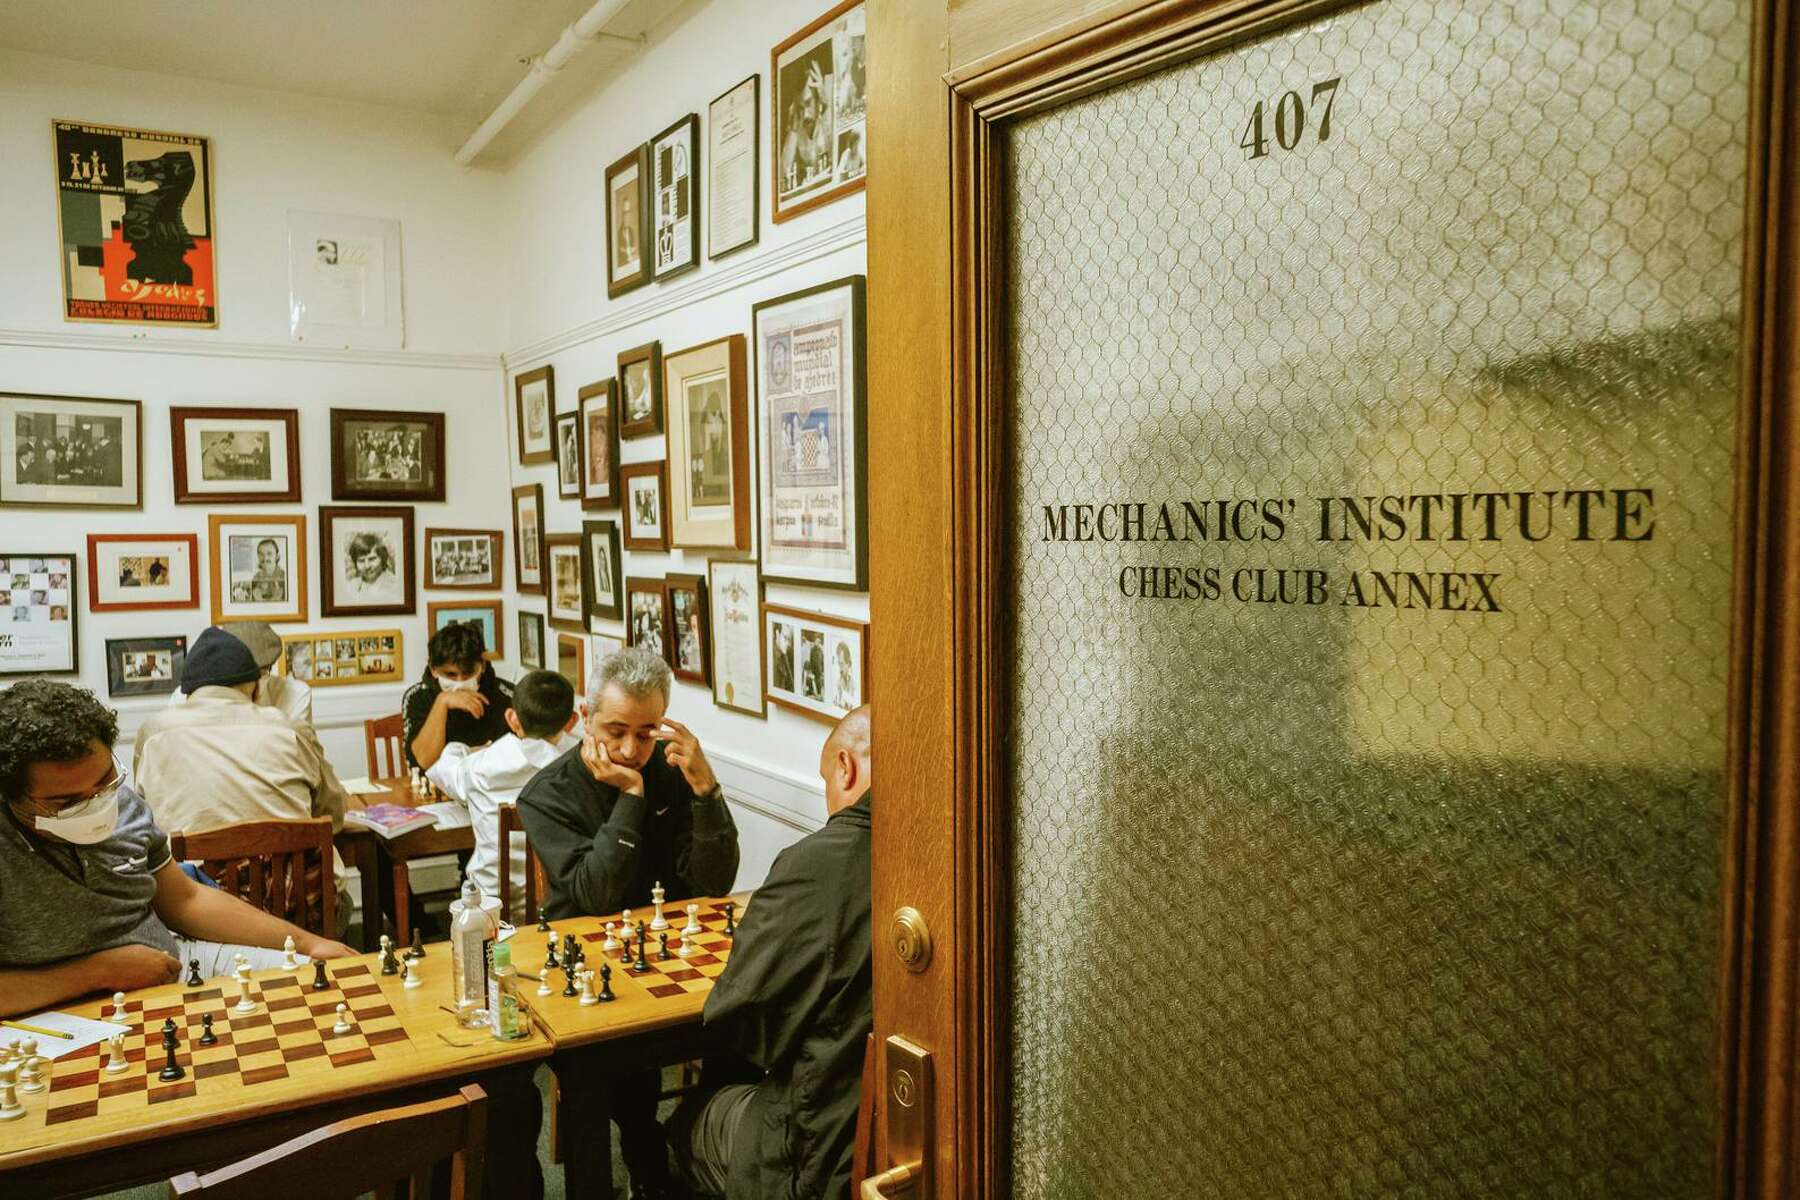 Farmington to host inaugural open chess tournament